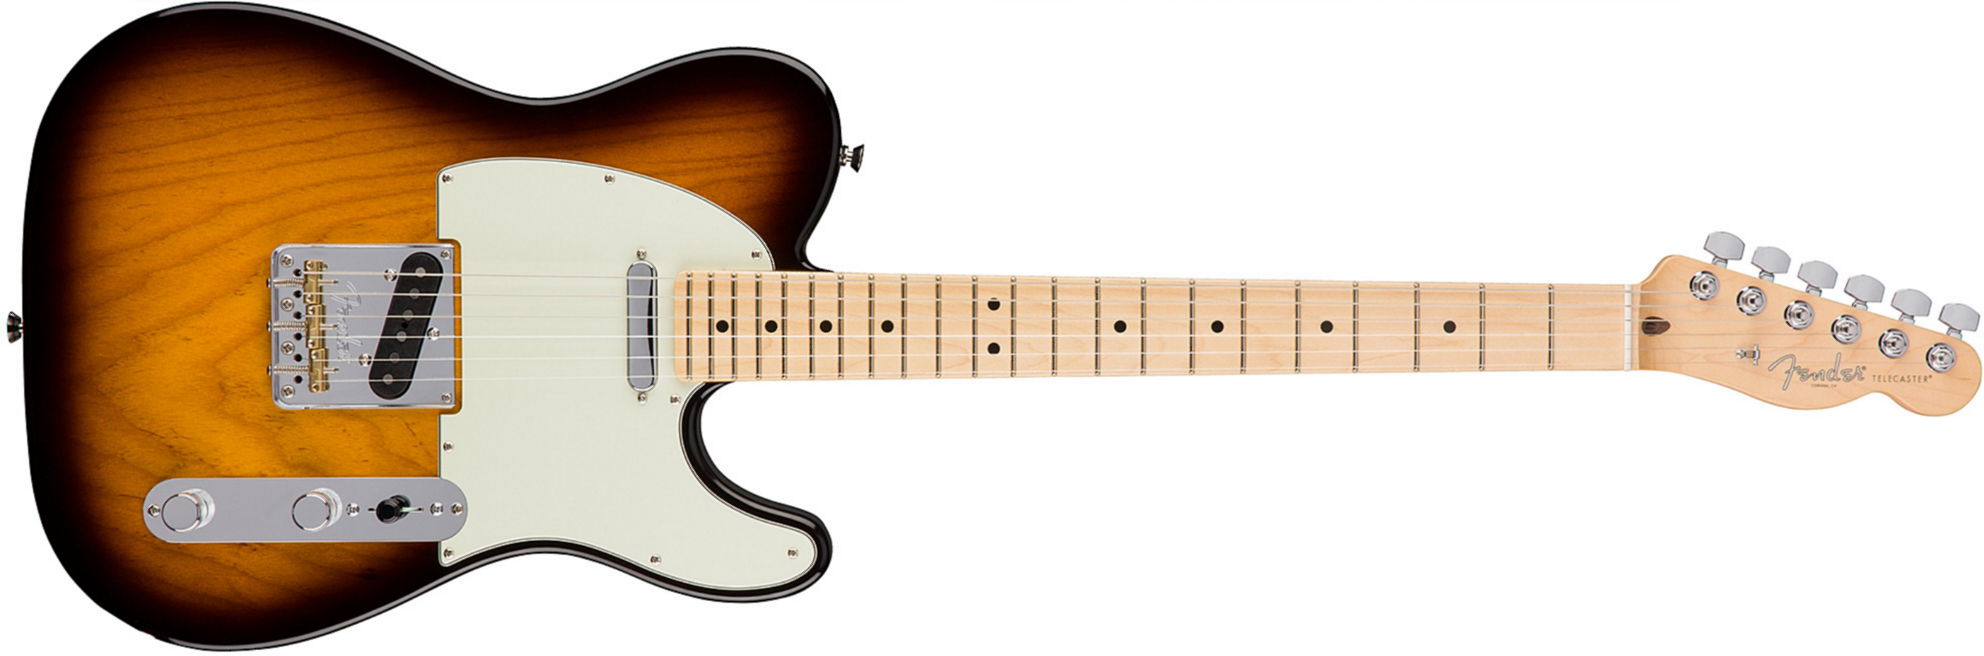 Fender Tele American Professional 2s Usa Mn - 2-color Sunburst - Guitarra eléctrica con forma de tel - Main picture